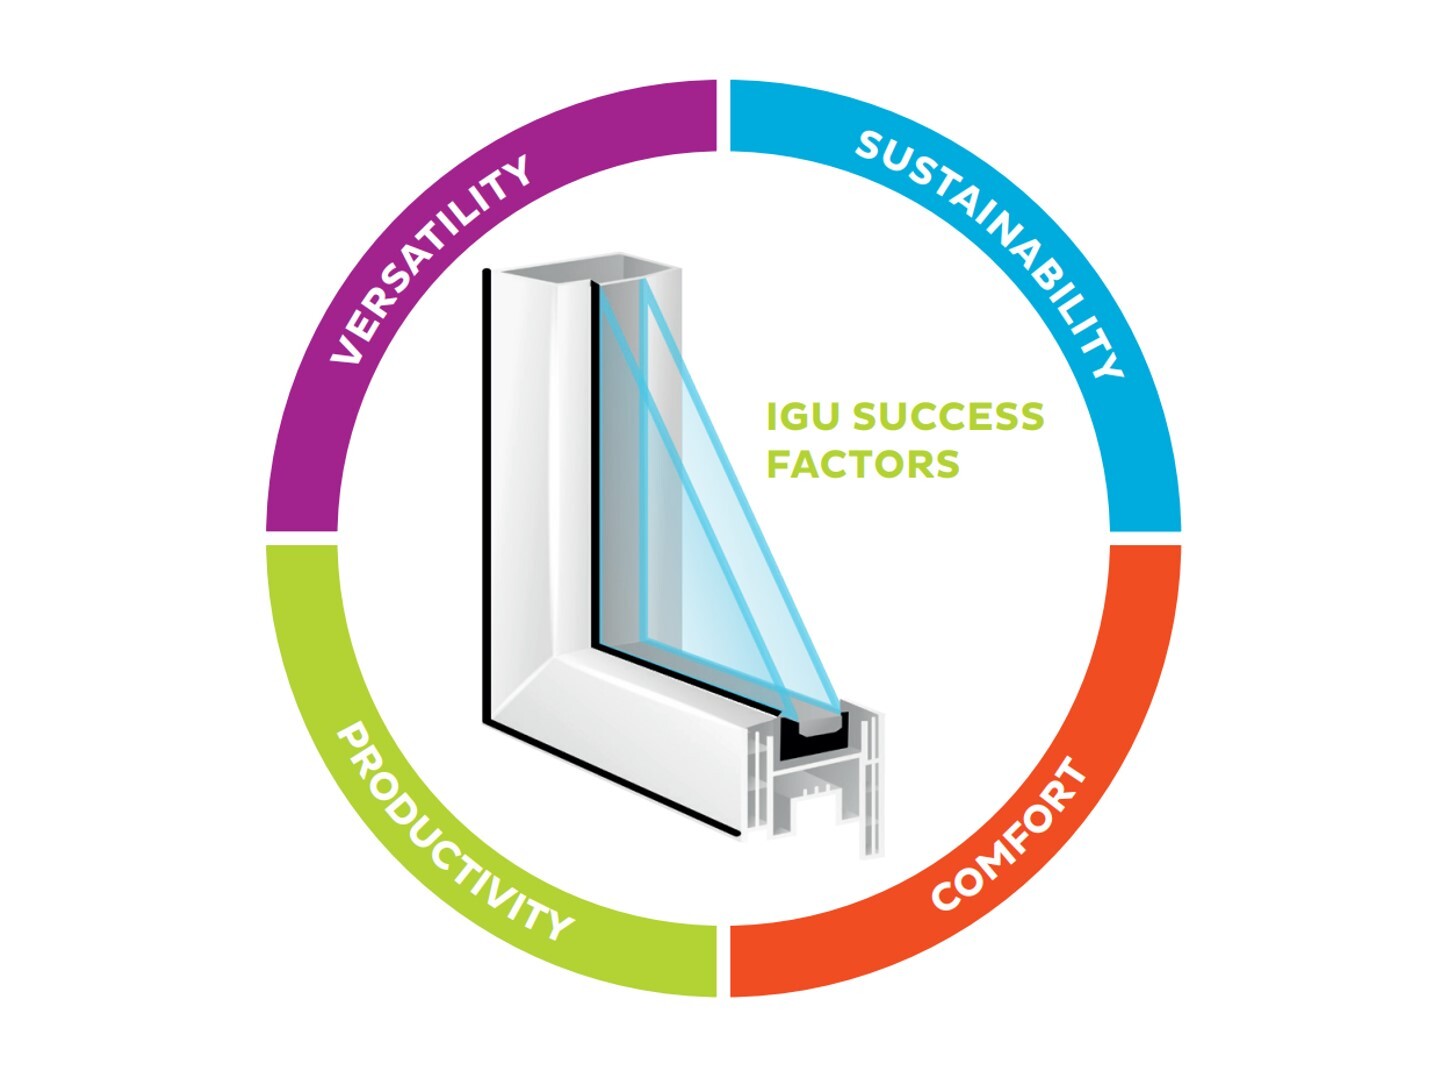 Insulating Glass Sealants, Building & Construction